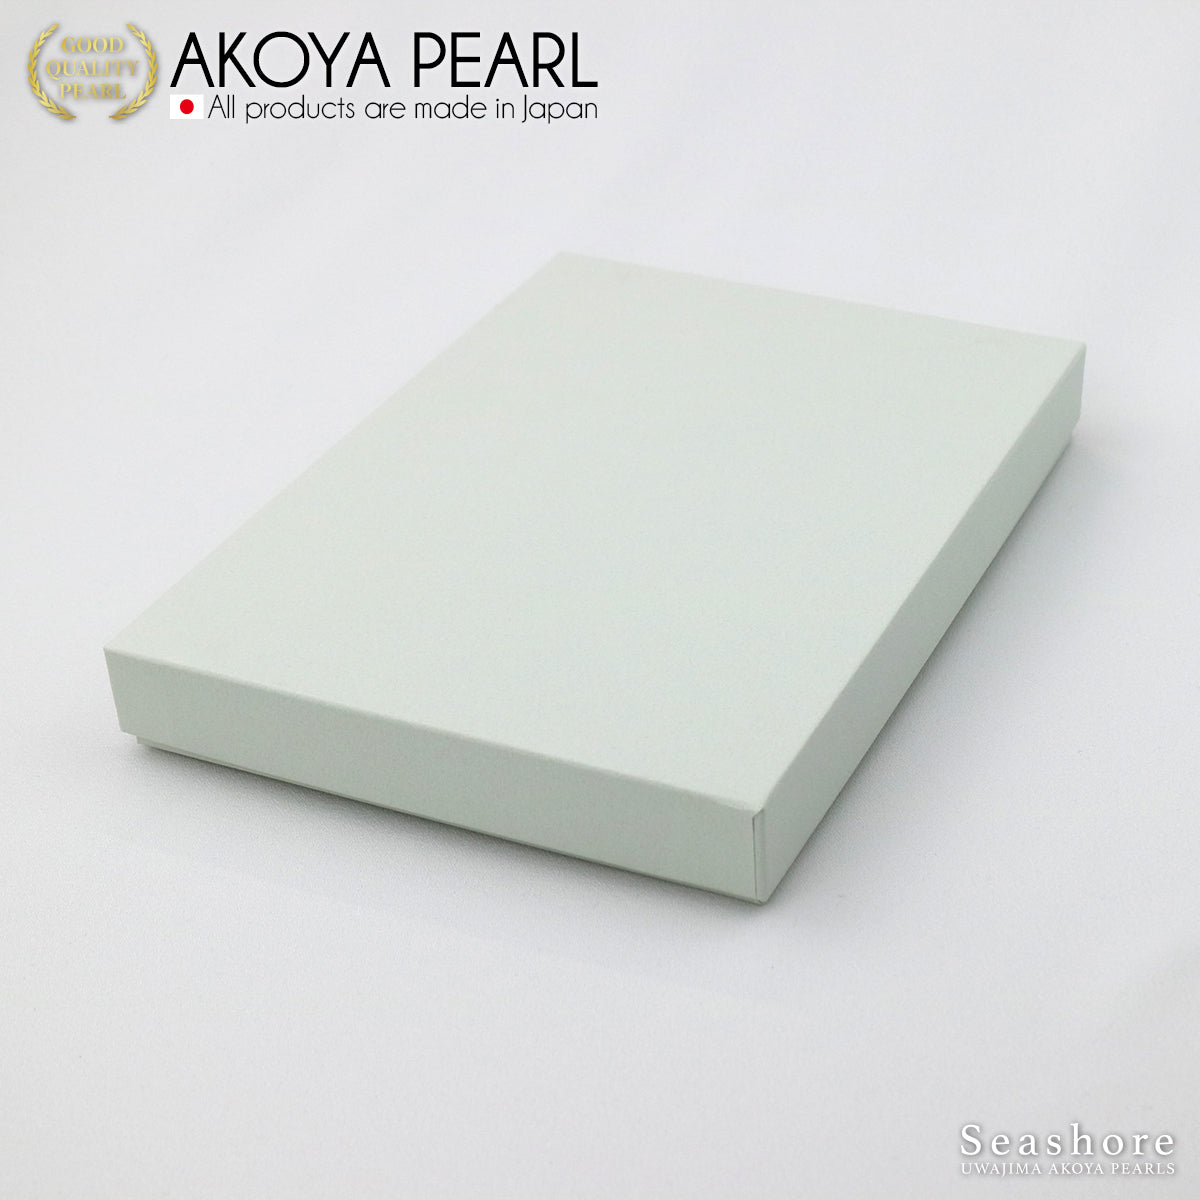 Omega paper case necklace case black/light gray (1.0.745.850)